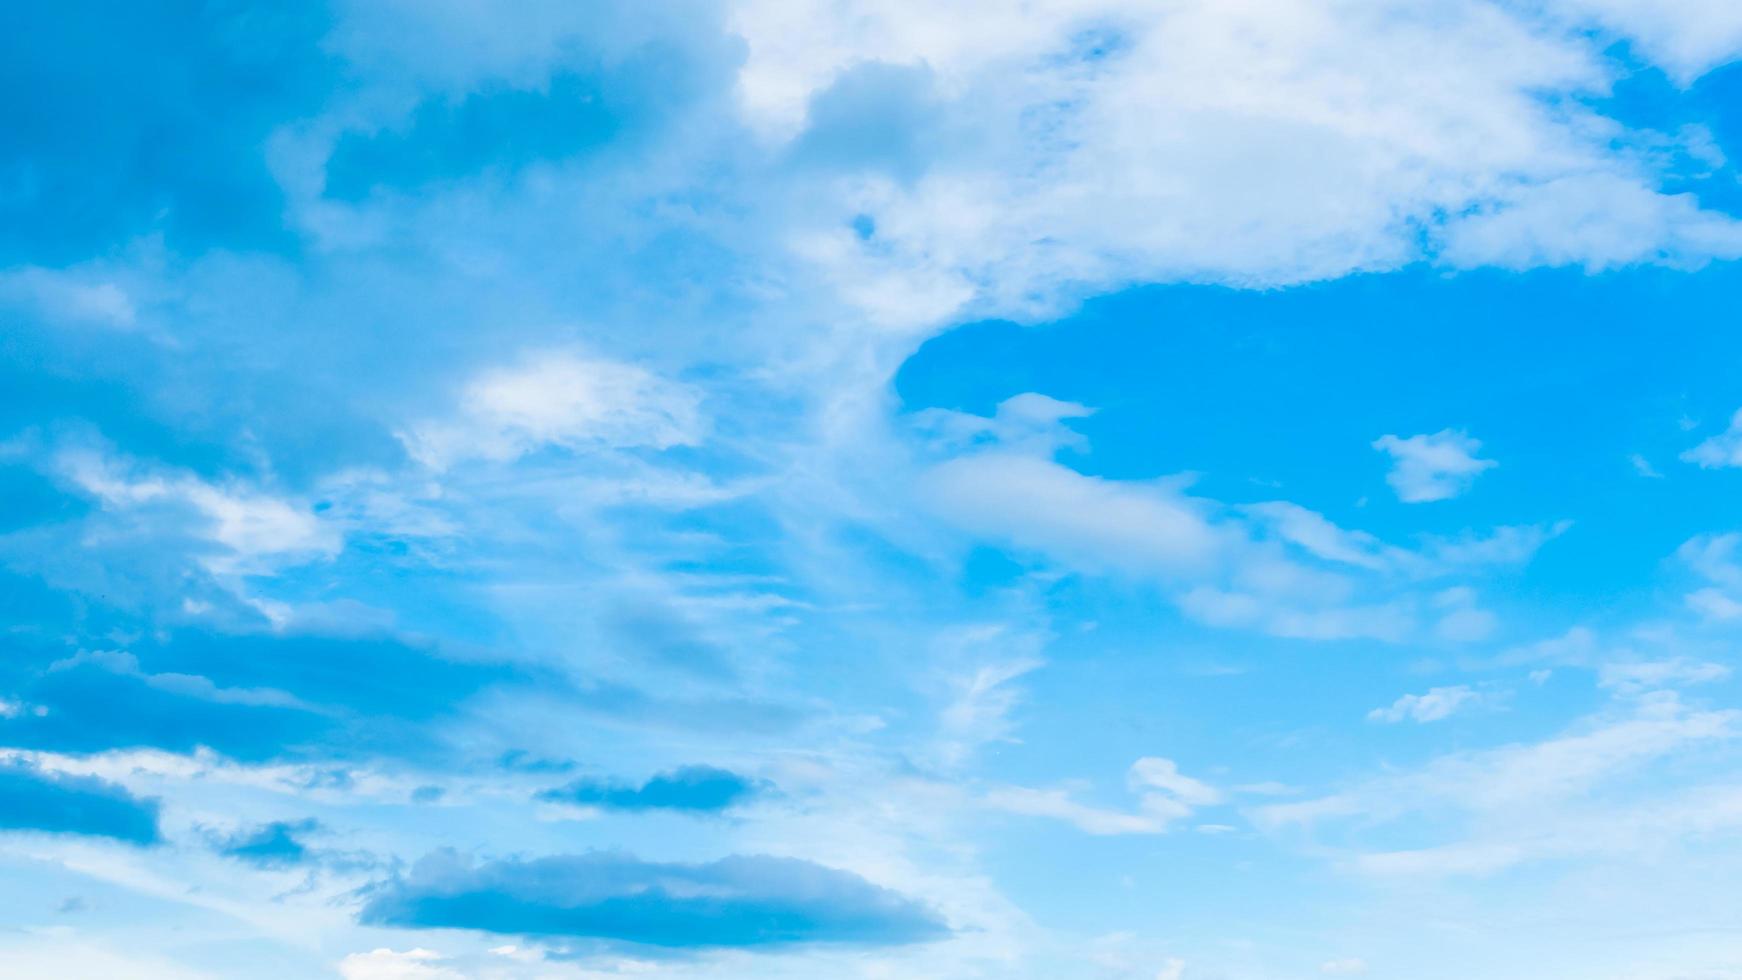 nuvola bianca sul cielo blu foto